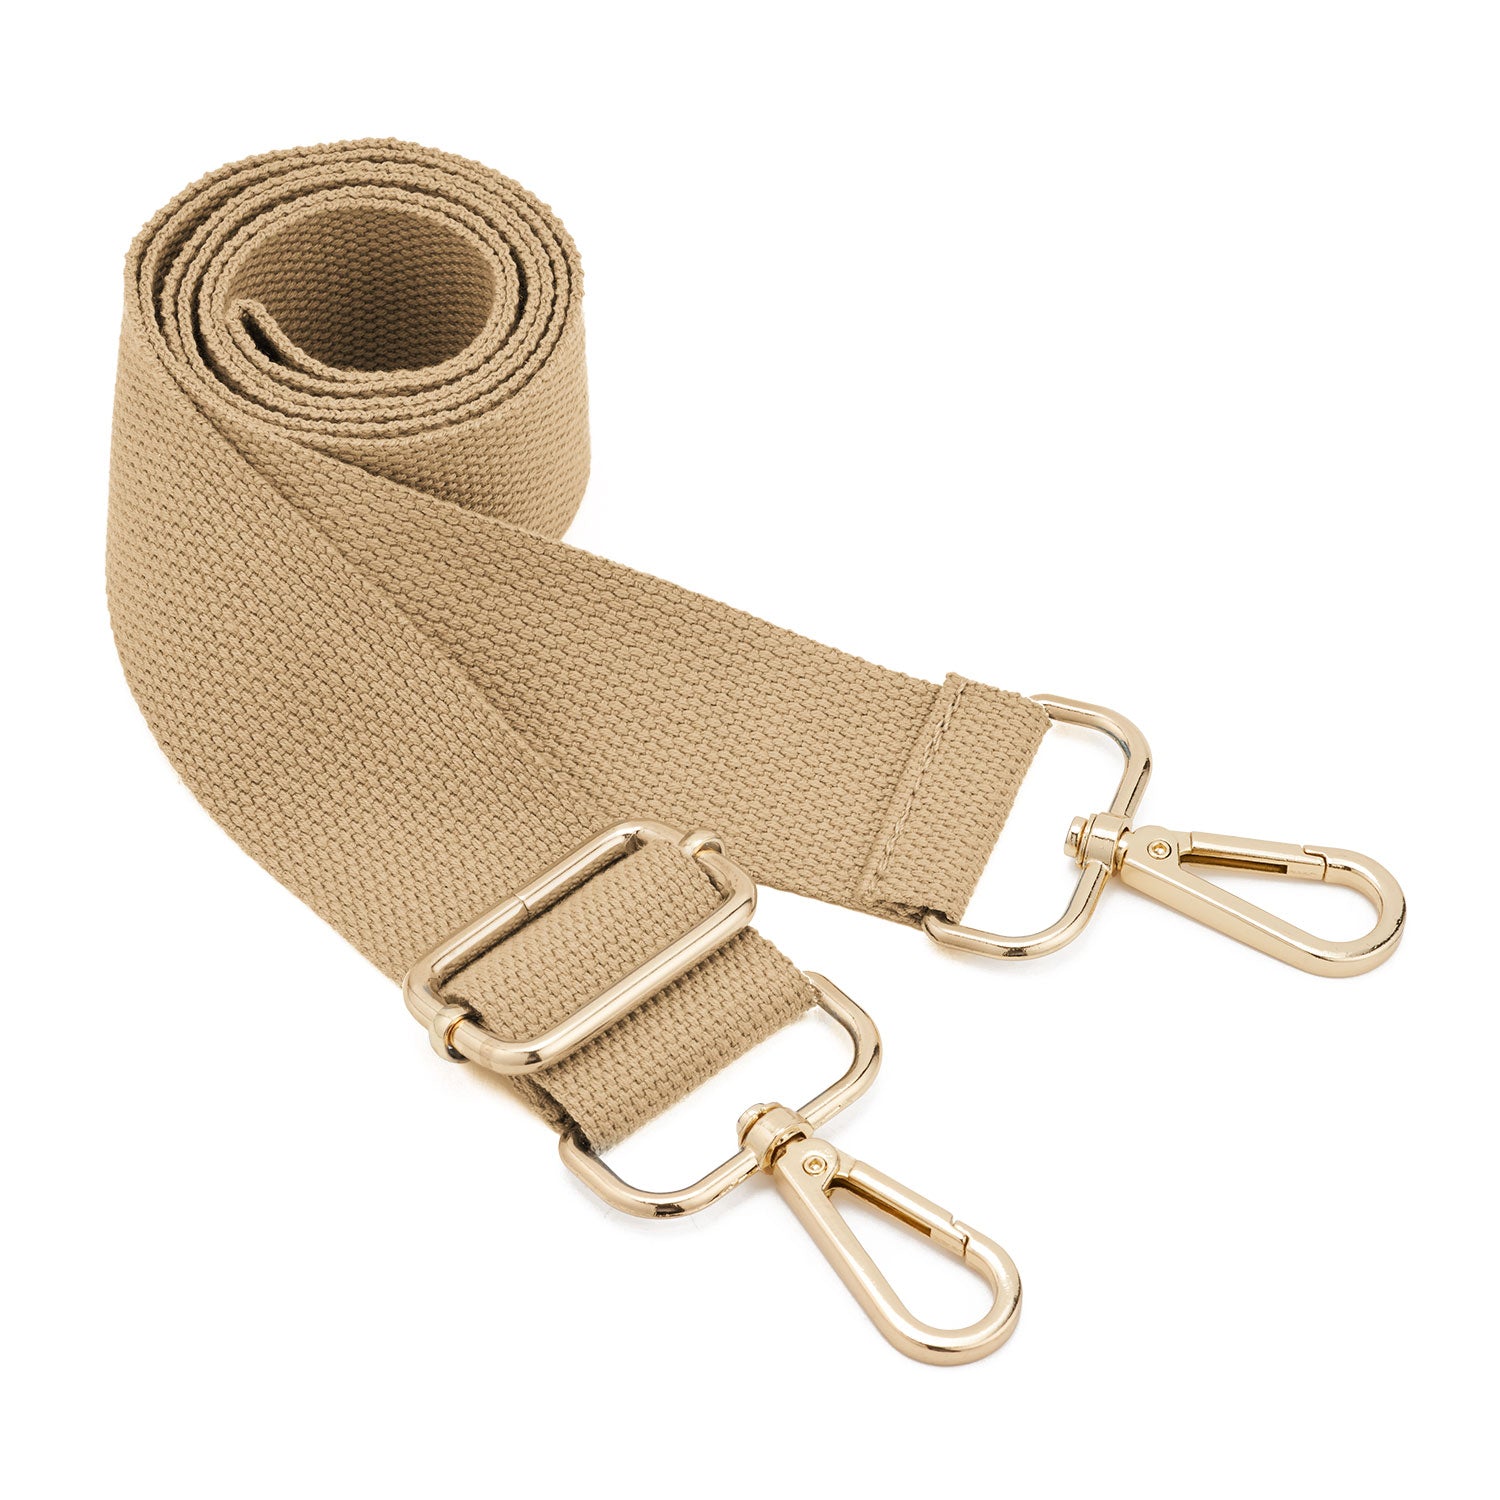  Beacone Wide Purse Strap Adjustable Canvas Replacement  Crossbody Handbag Shoulder Bag Strap (A-Beige) : Arts, Crafts & Sewing